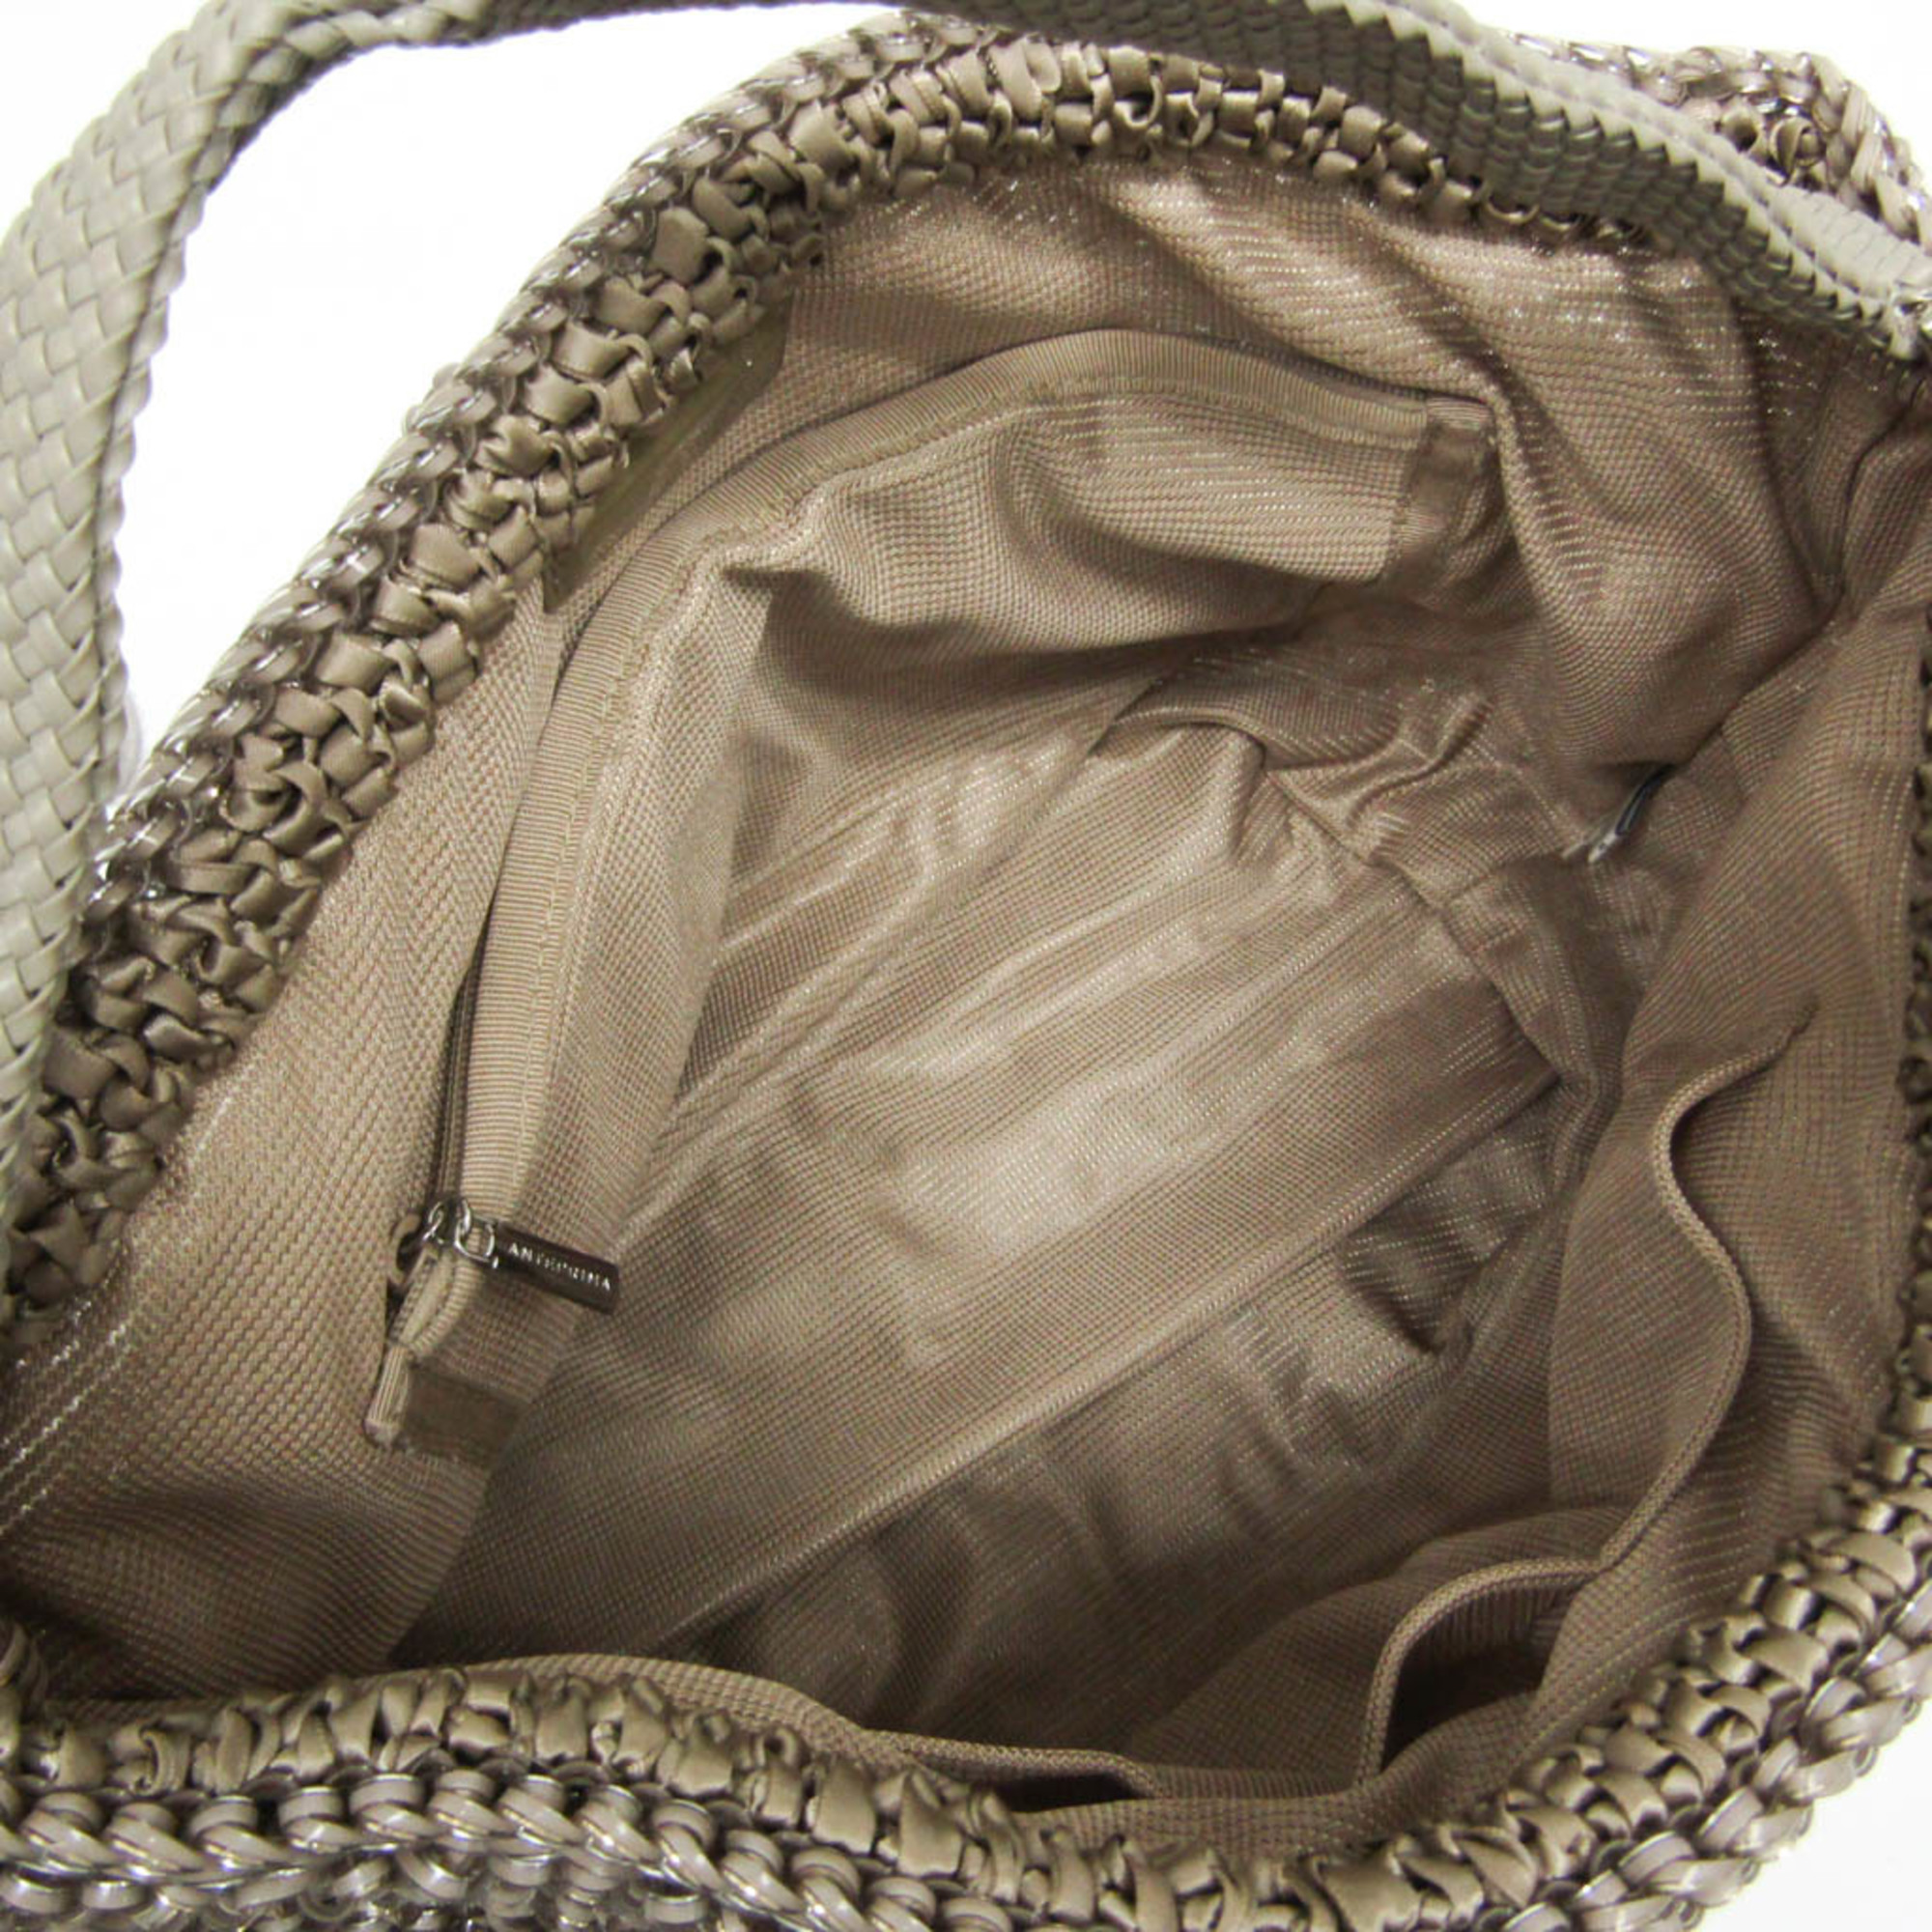 Anteprima Women's Wire,PVC Handbag,Tote Bag Grayish